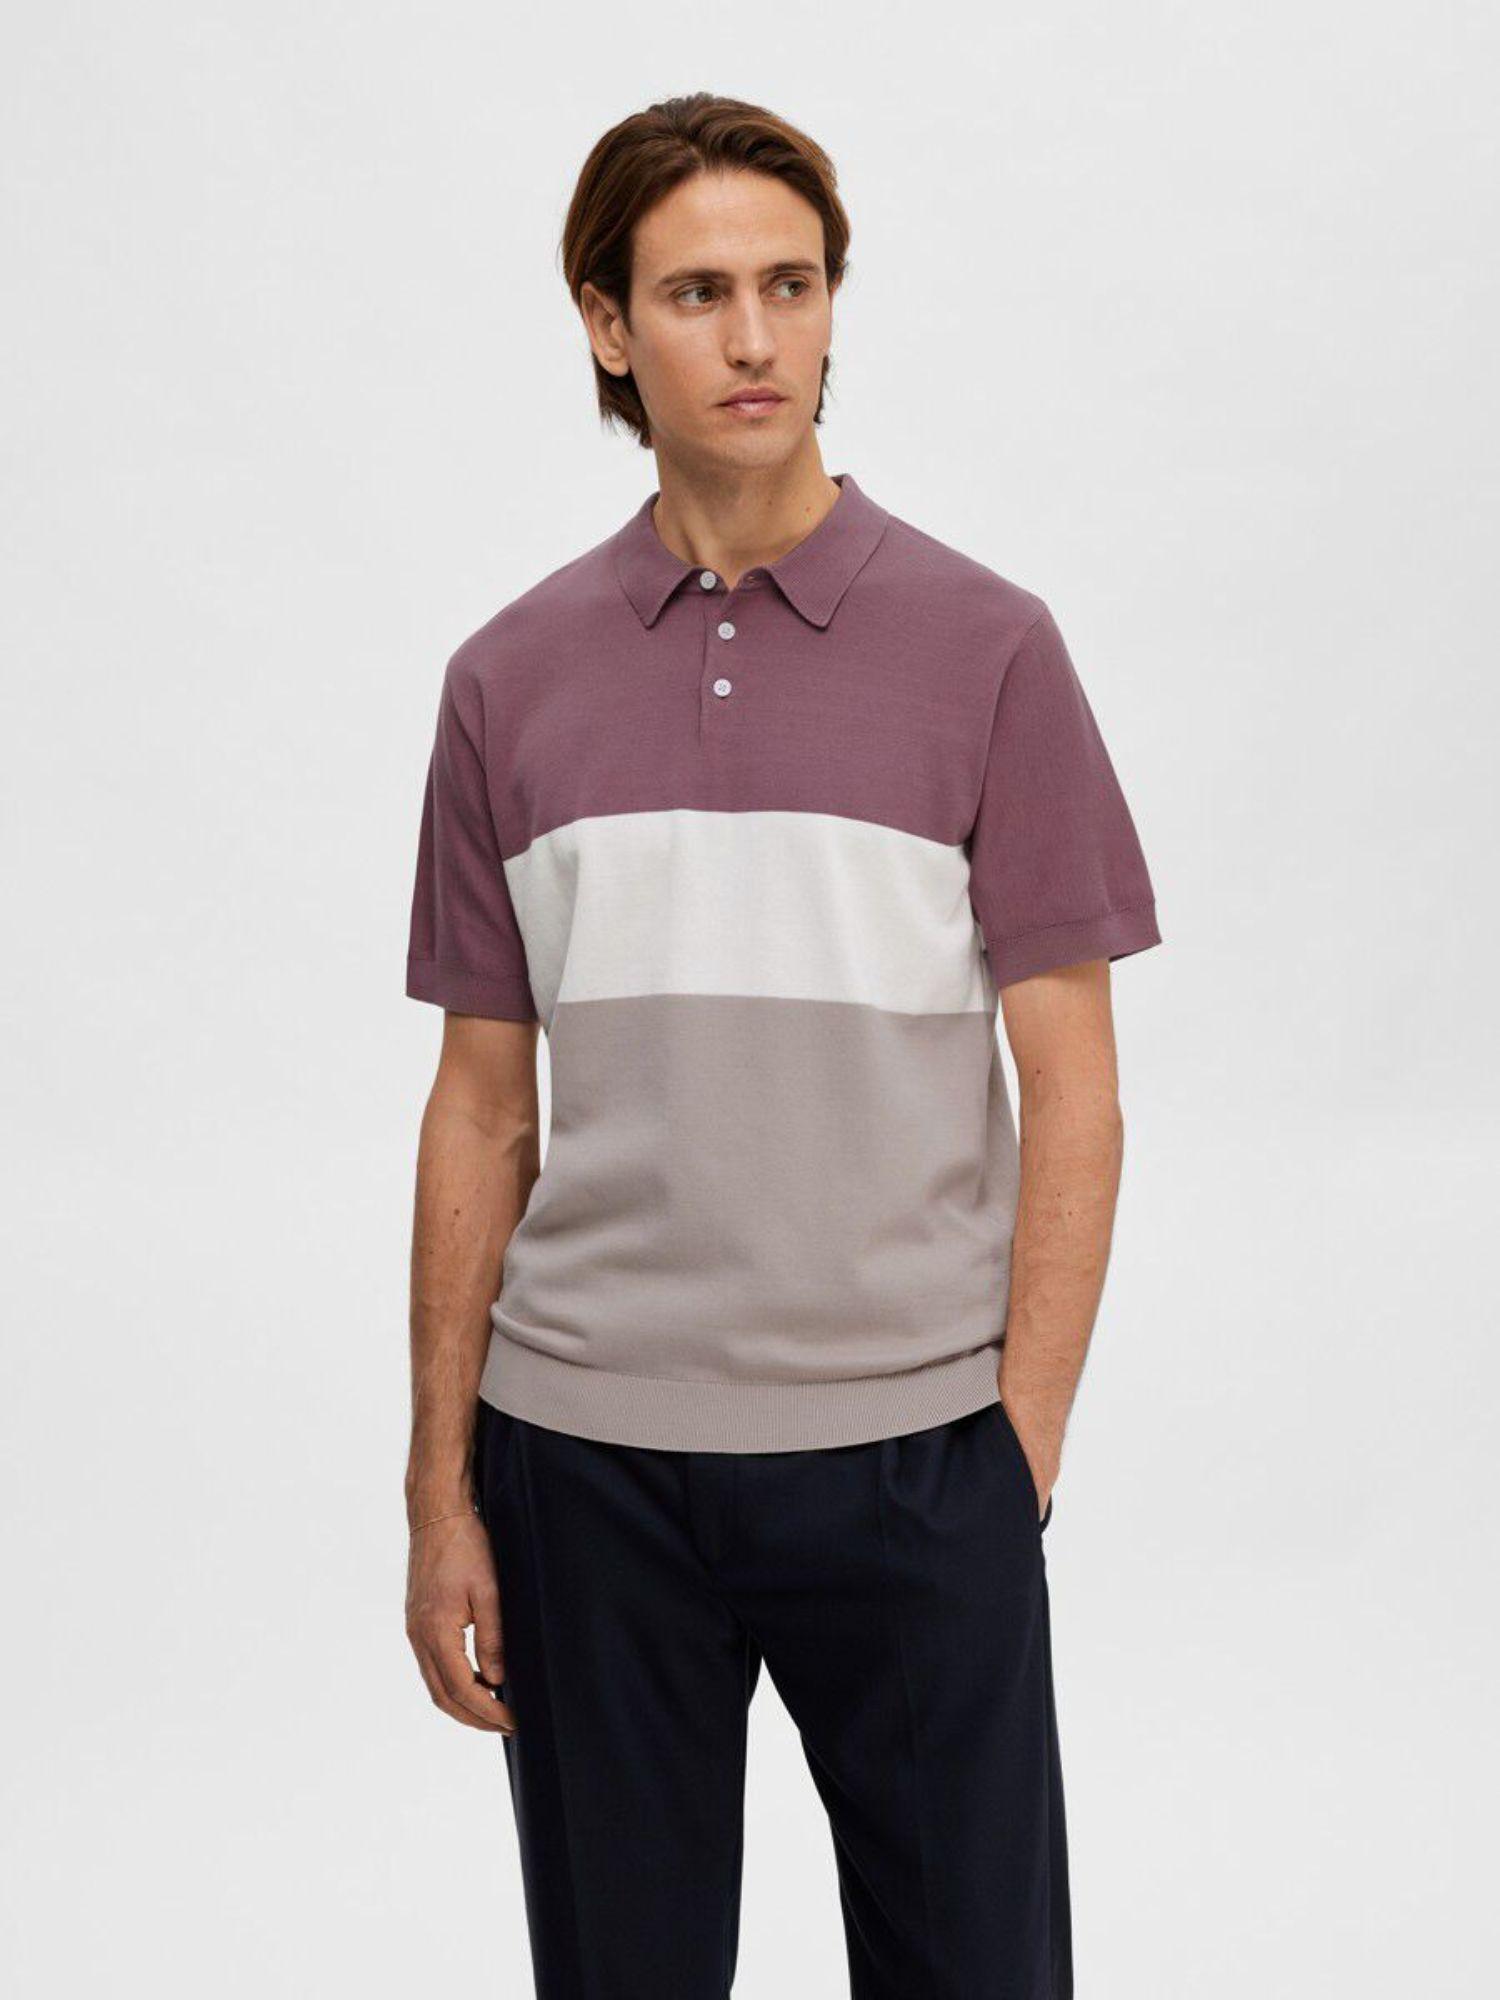 mauve colourblocked polo t-shirt